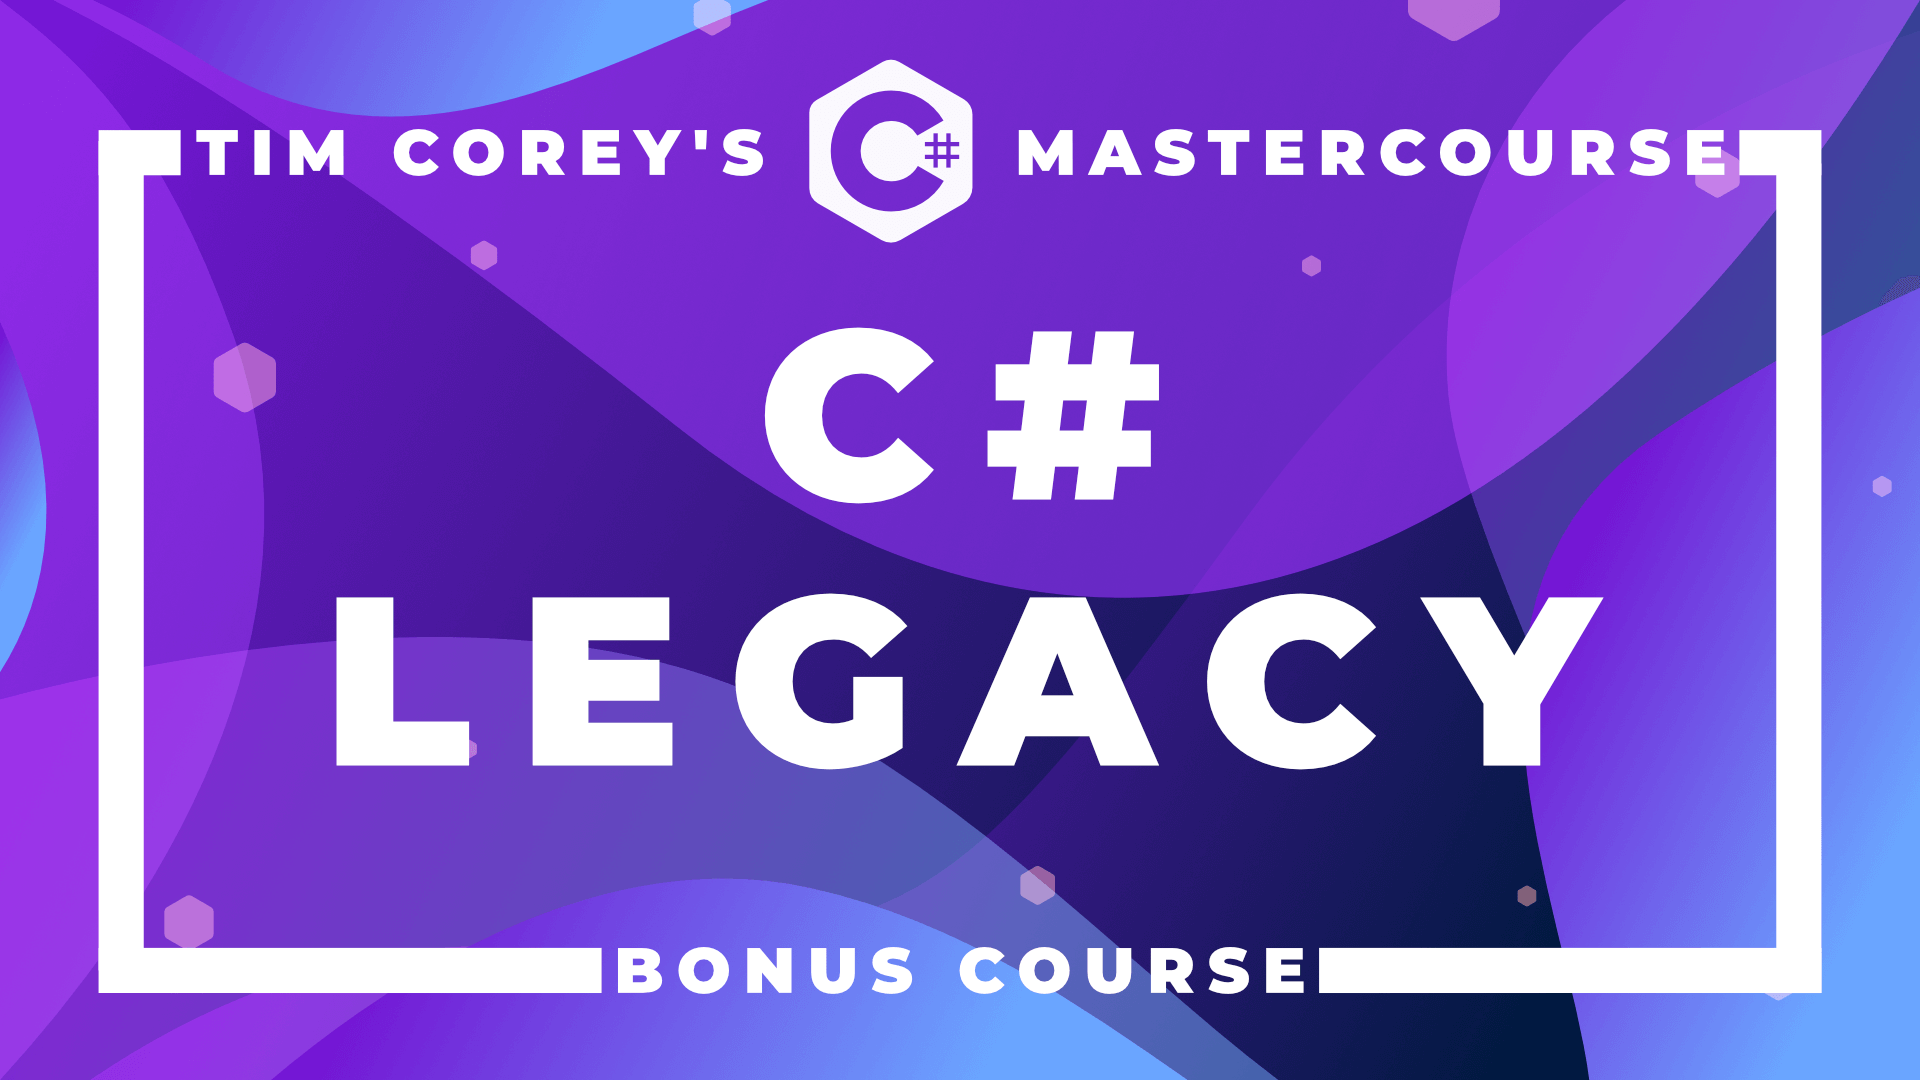 The C# Legacy course logo.